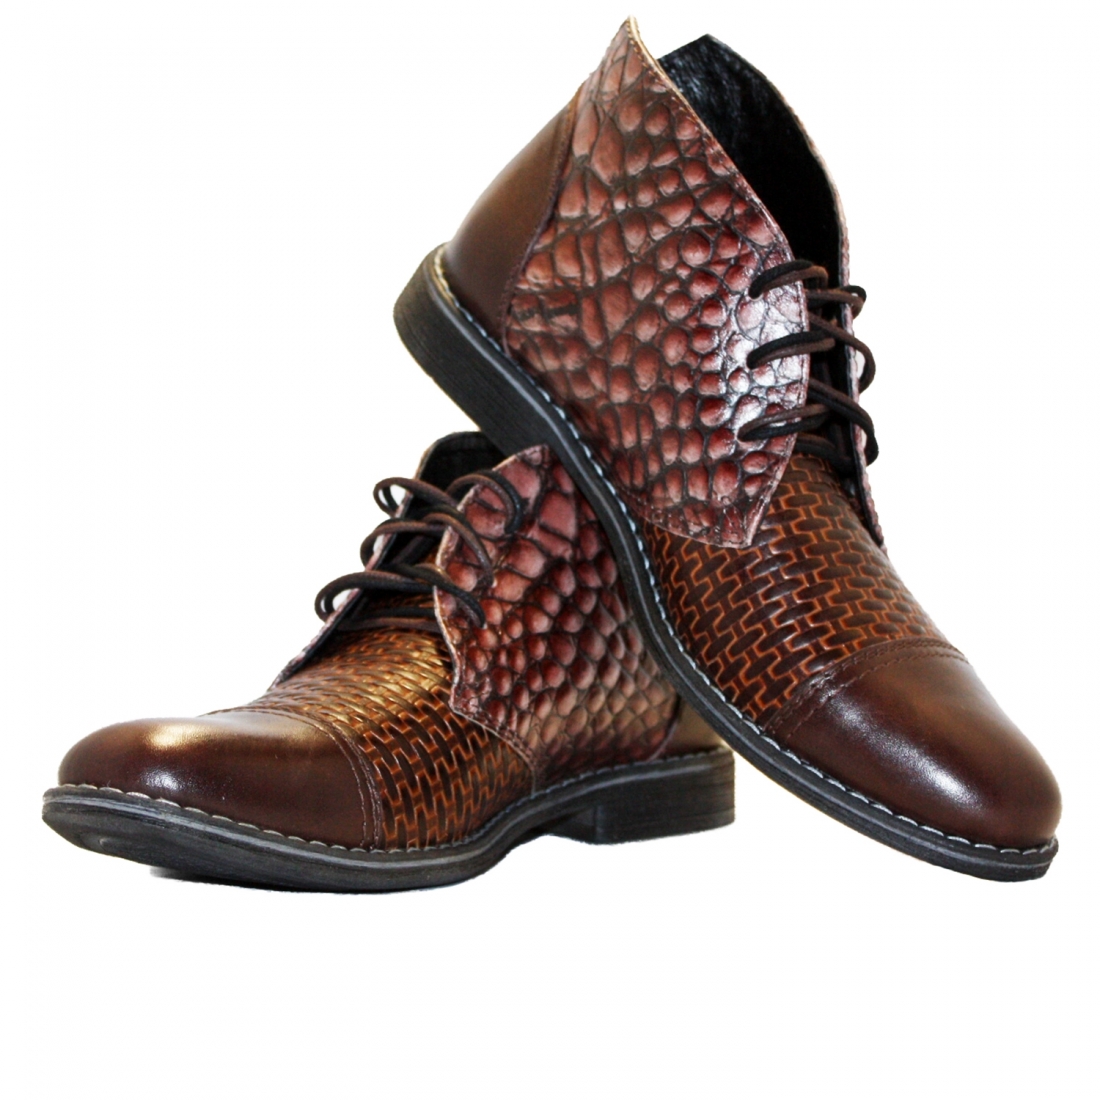 Modello Brunerro - Buty Chukka - Handmade Colorful Italian Leather Shoes